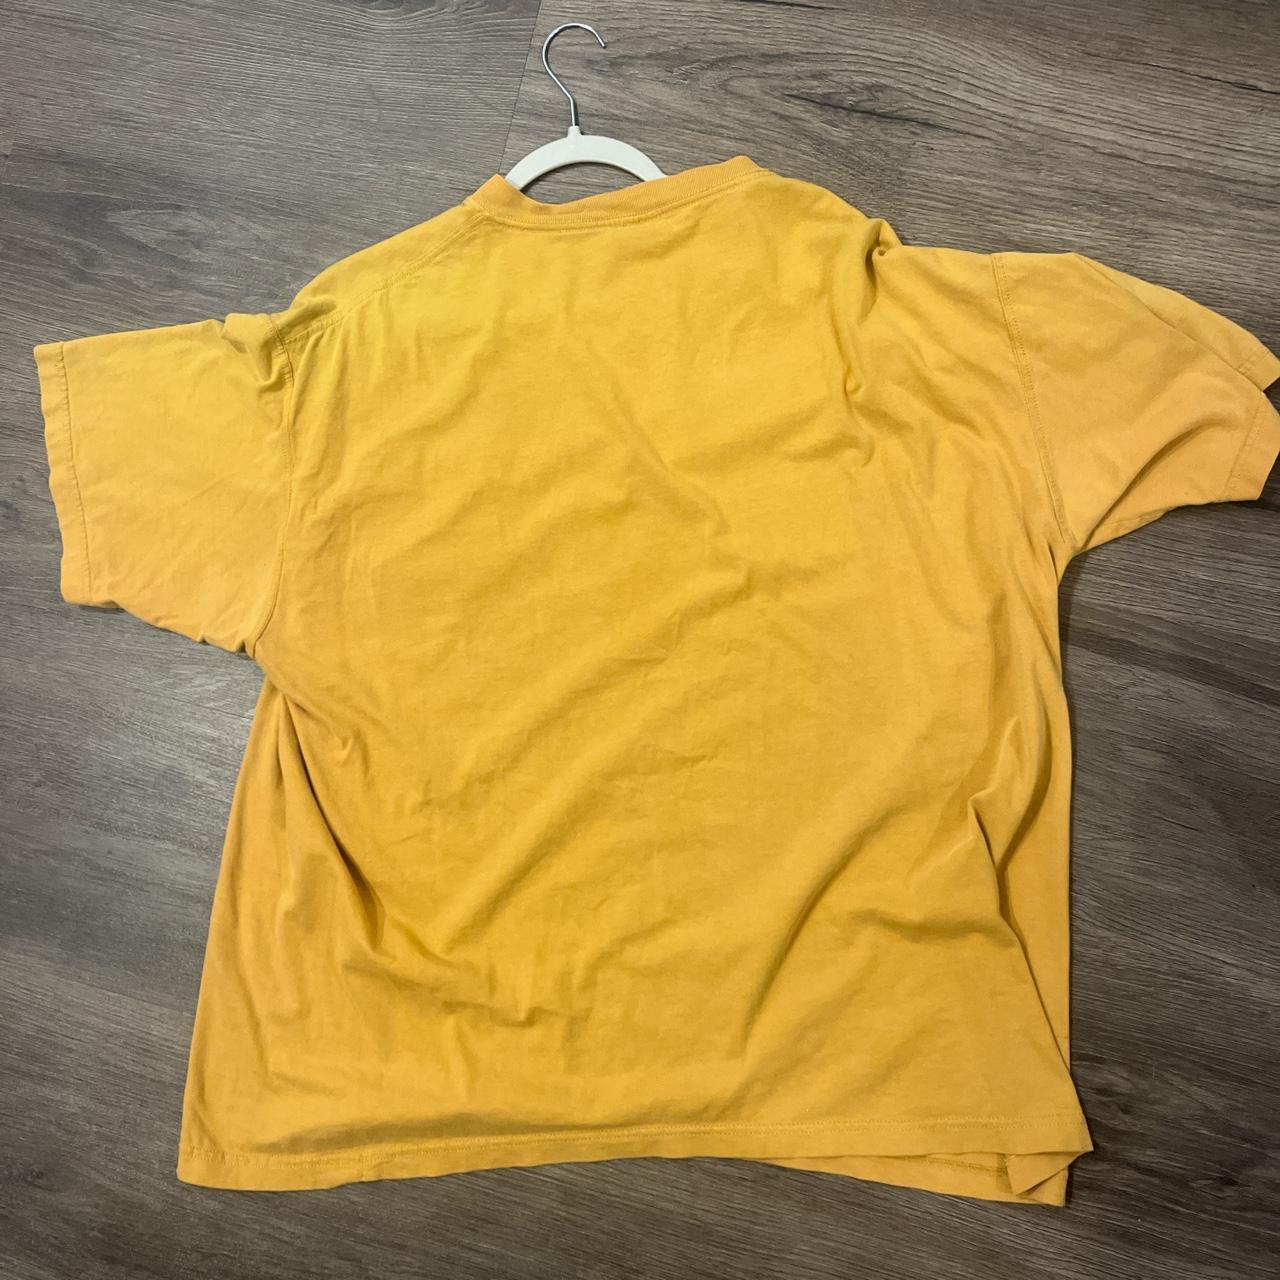 Jockey Men's Yellow and Khaki T-shirt (2)